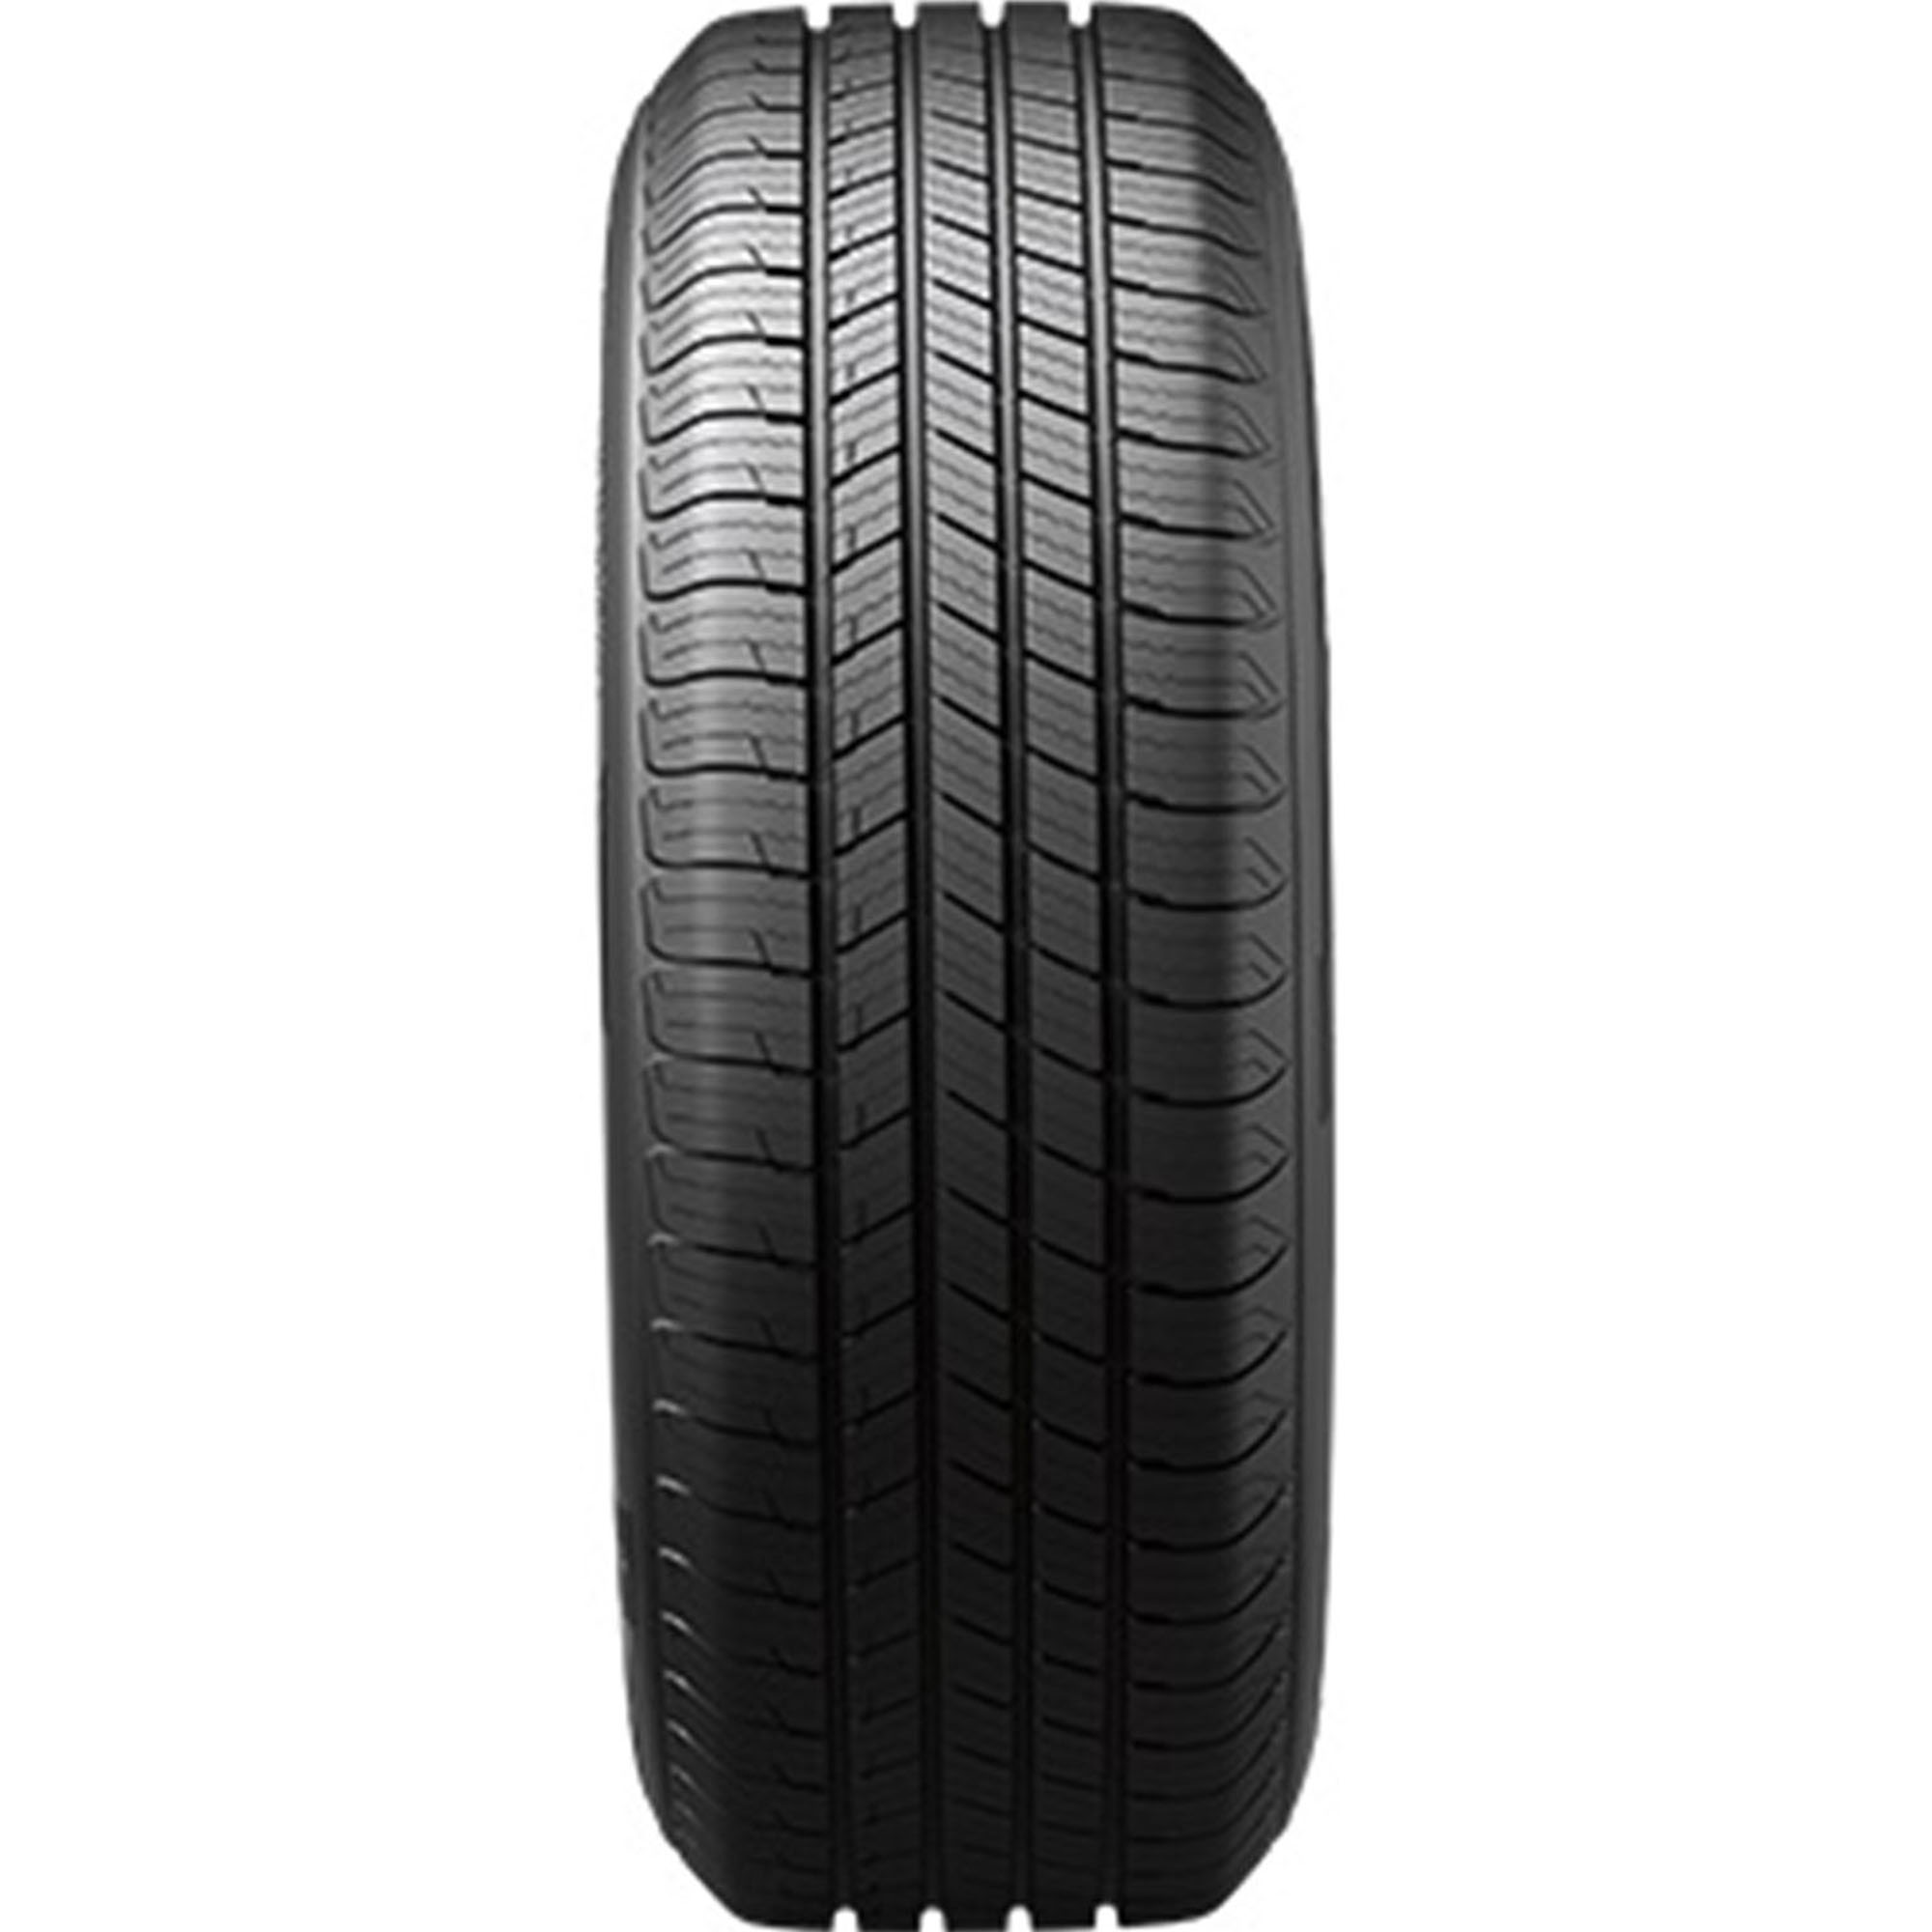 Michelin Defender T+H All Season 195/65R15 91H Passenger Tire - image 4 of 4